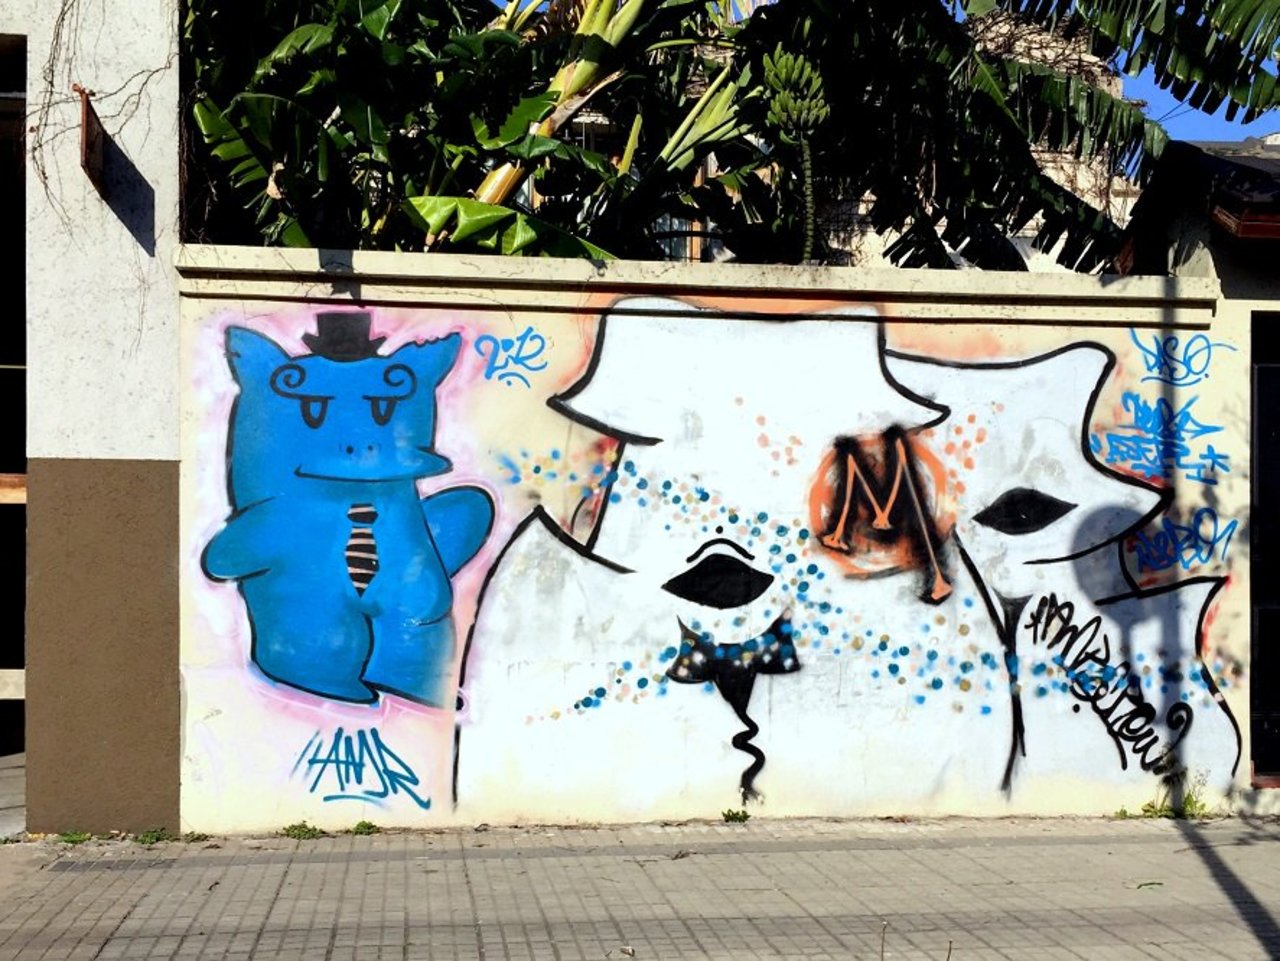 #Graffiti de hoy: << Blue bear >> Calle 9, 67y68 #LaPlata #Argentina #StreetArt #UrbanArt #ArteUrbano https://t.co/KxhH1deGZm